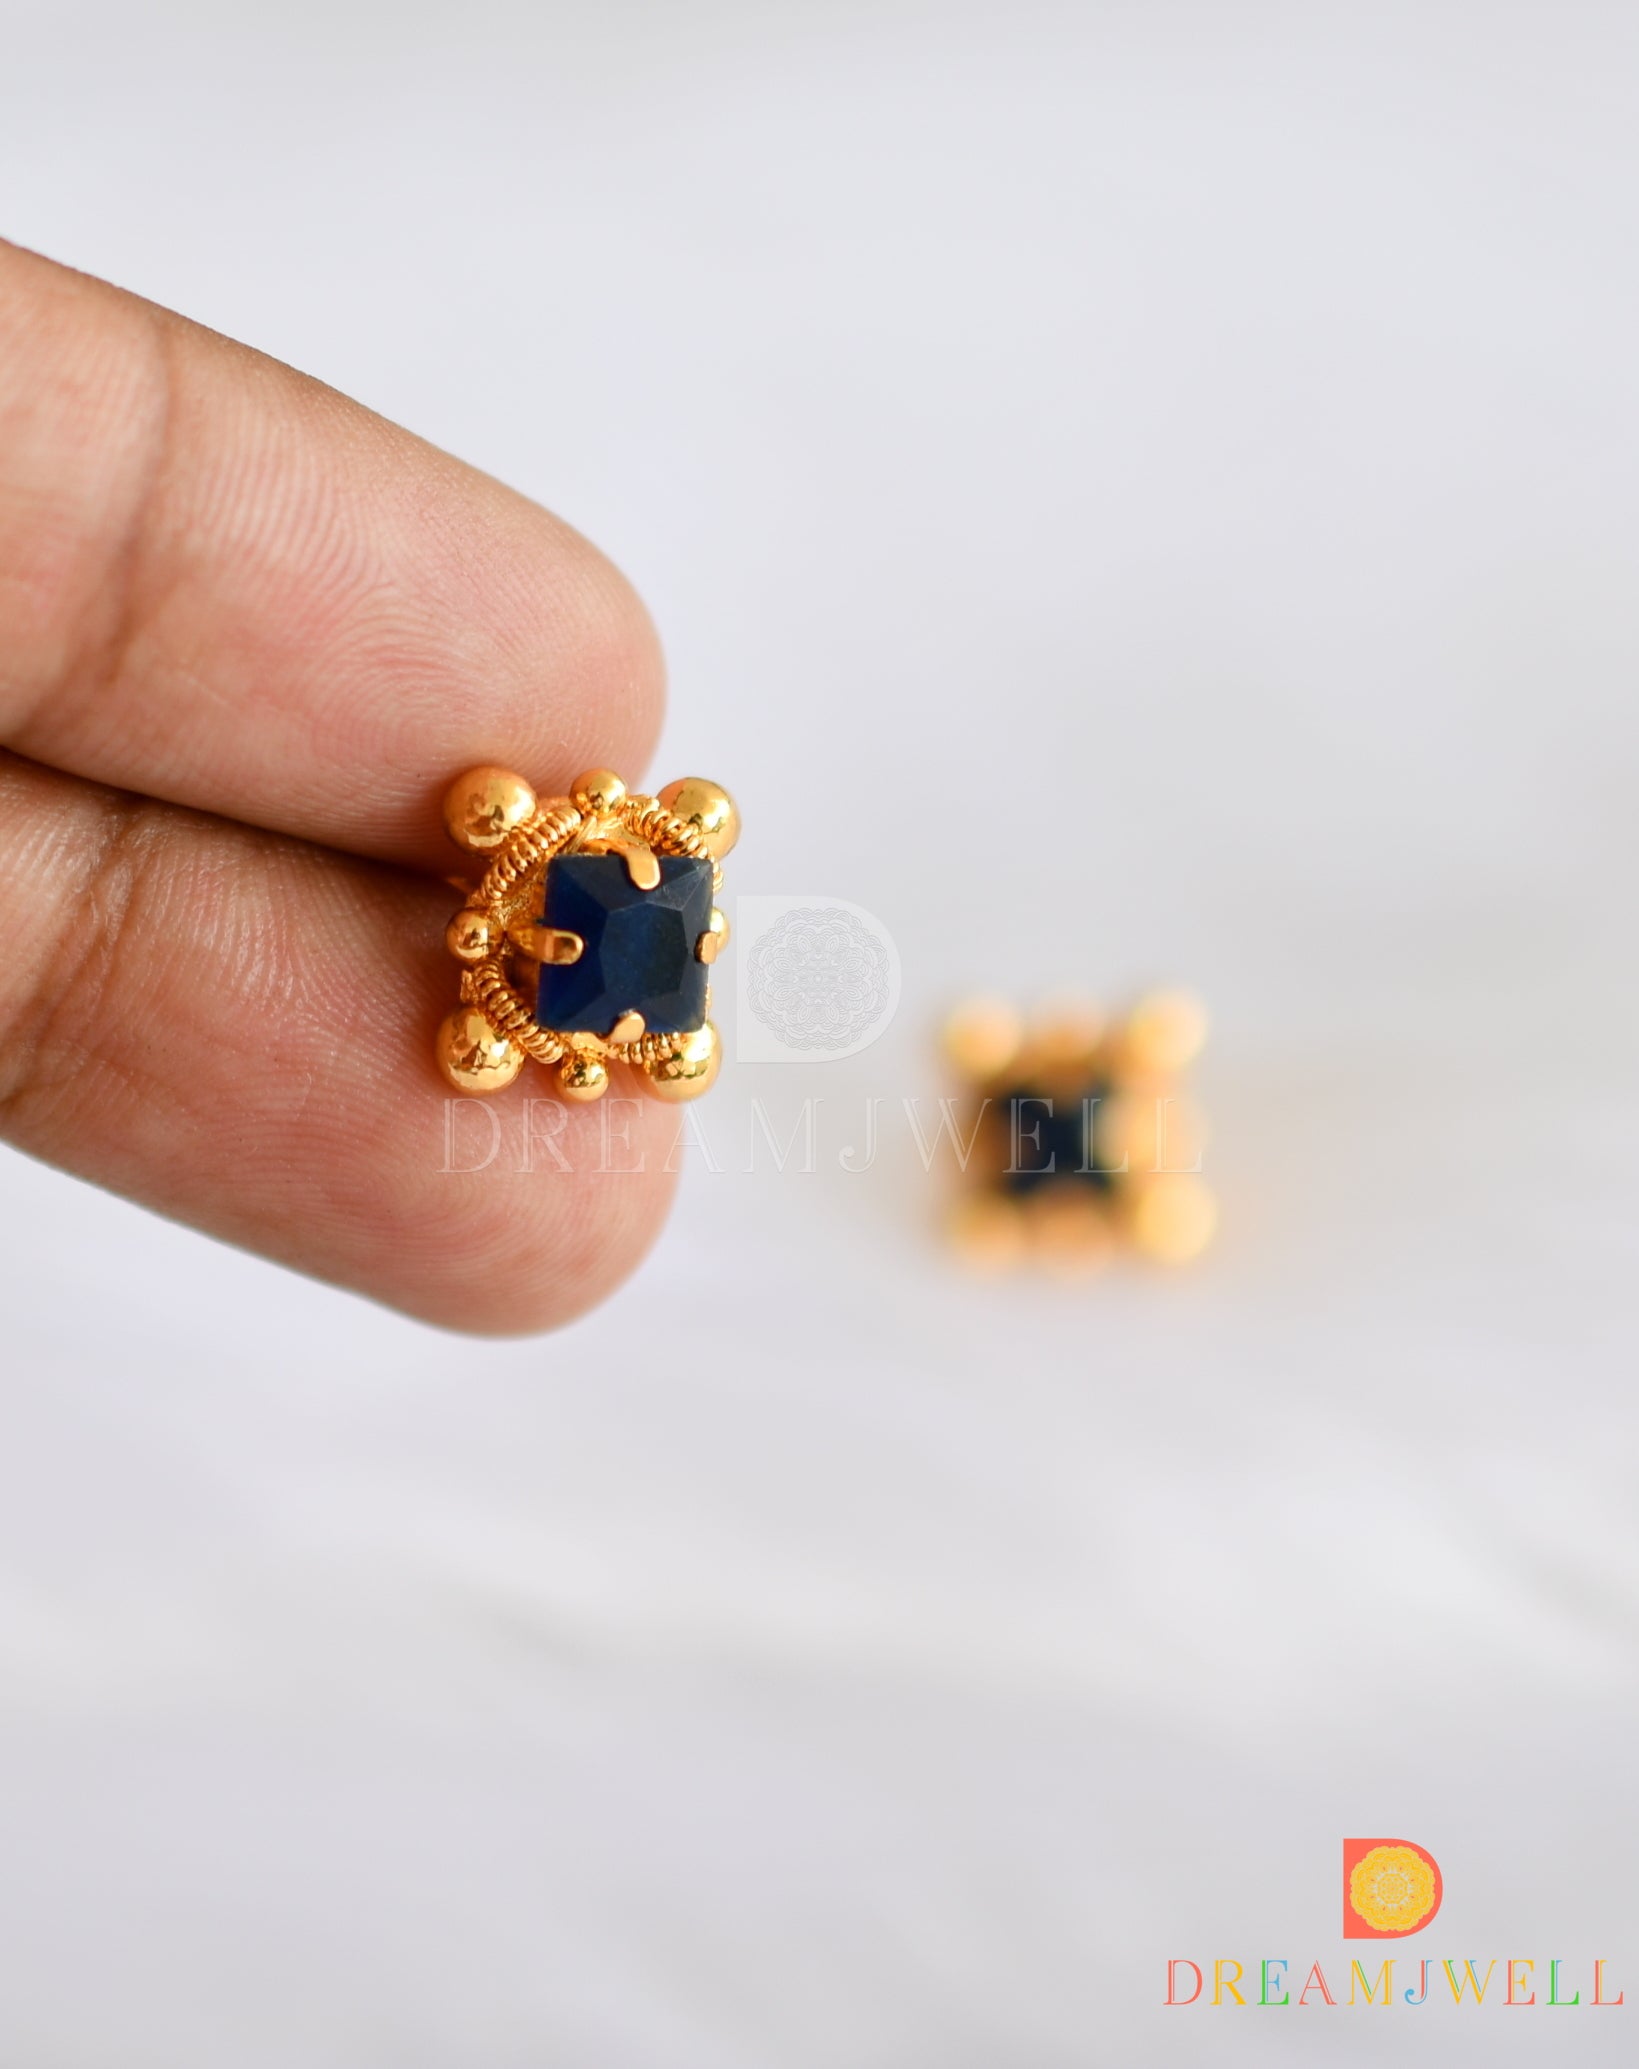 Flipkartcom  Buy Bello Naari Blue Color Stone Square Shape American  Diamond Stud Earrings For Women  Girls Zircon Stone Stud Earring Online at  Best Prices in India